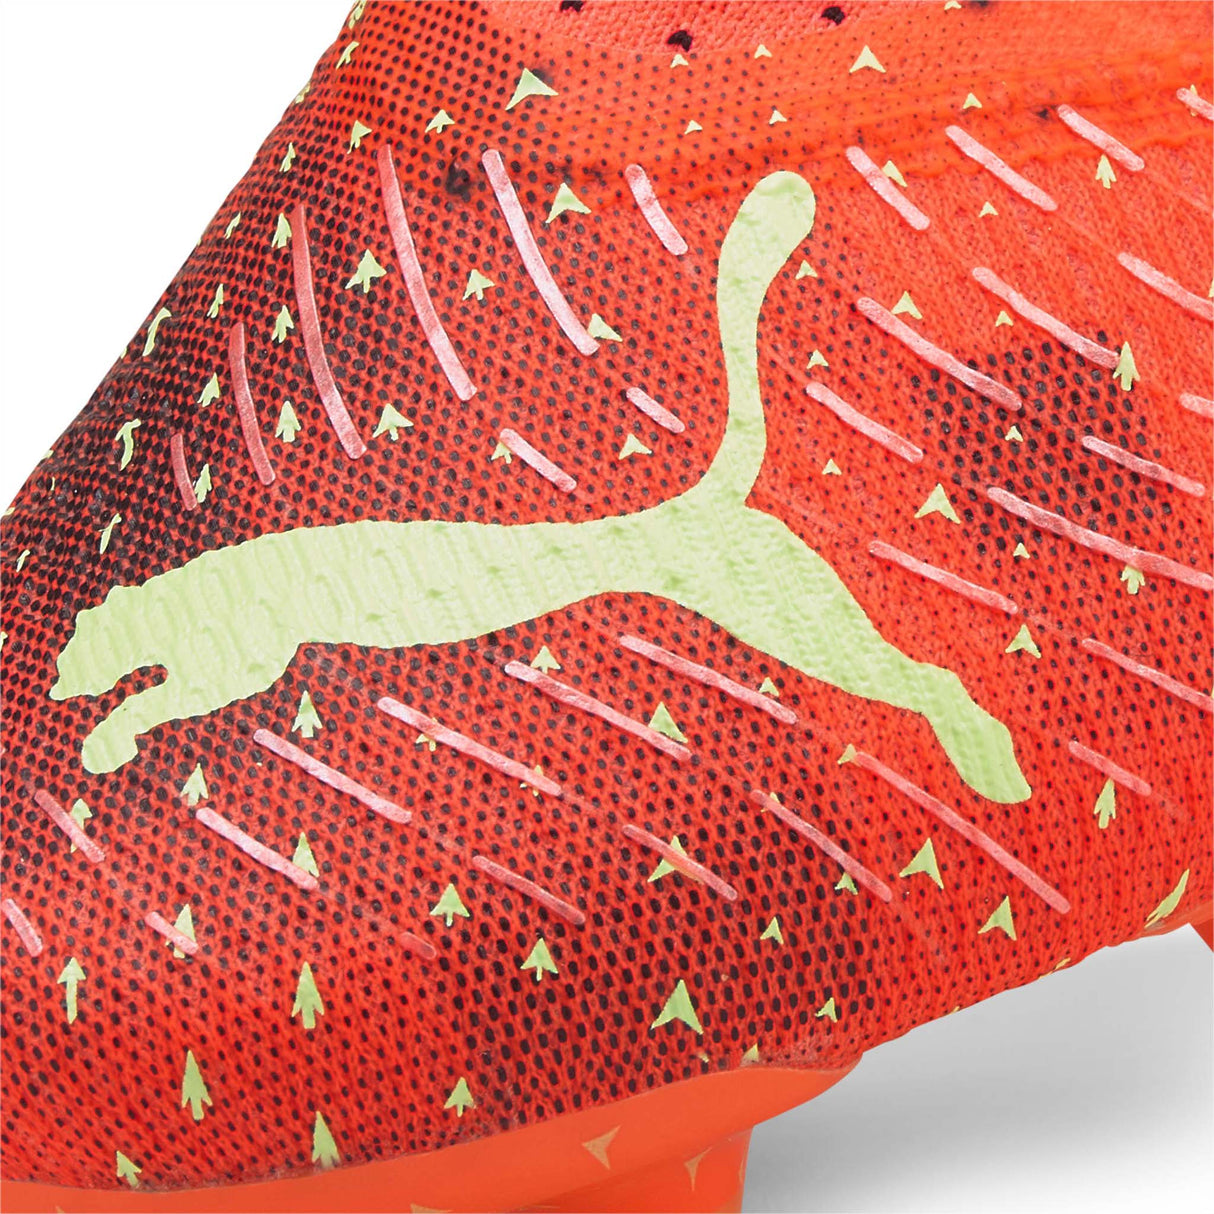 Puma Future Z 1.4 FG/AG souliers de soccer crampons Fiery Coral / Fizzy Light / Puma Black / Salmon logo